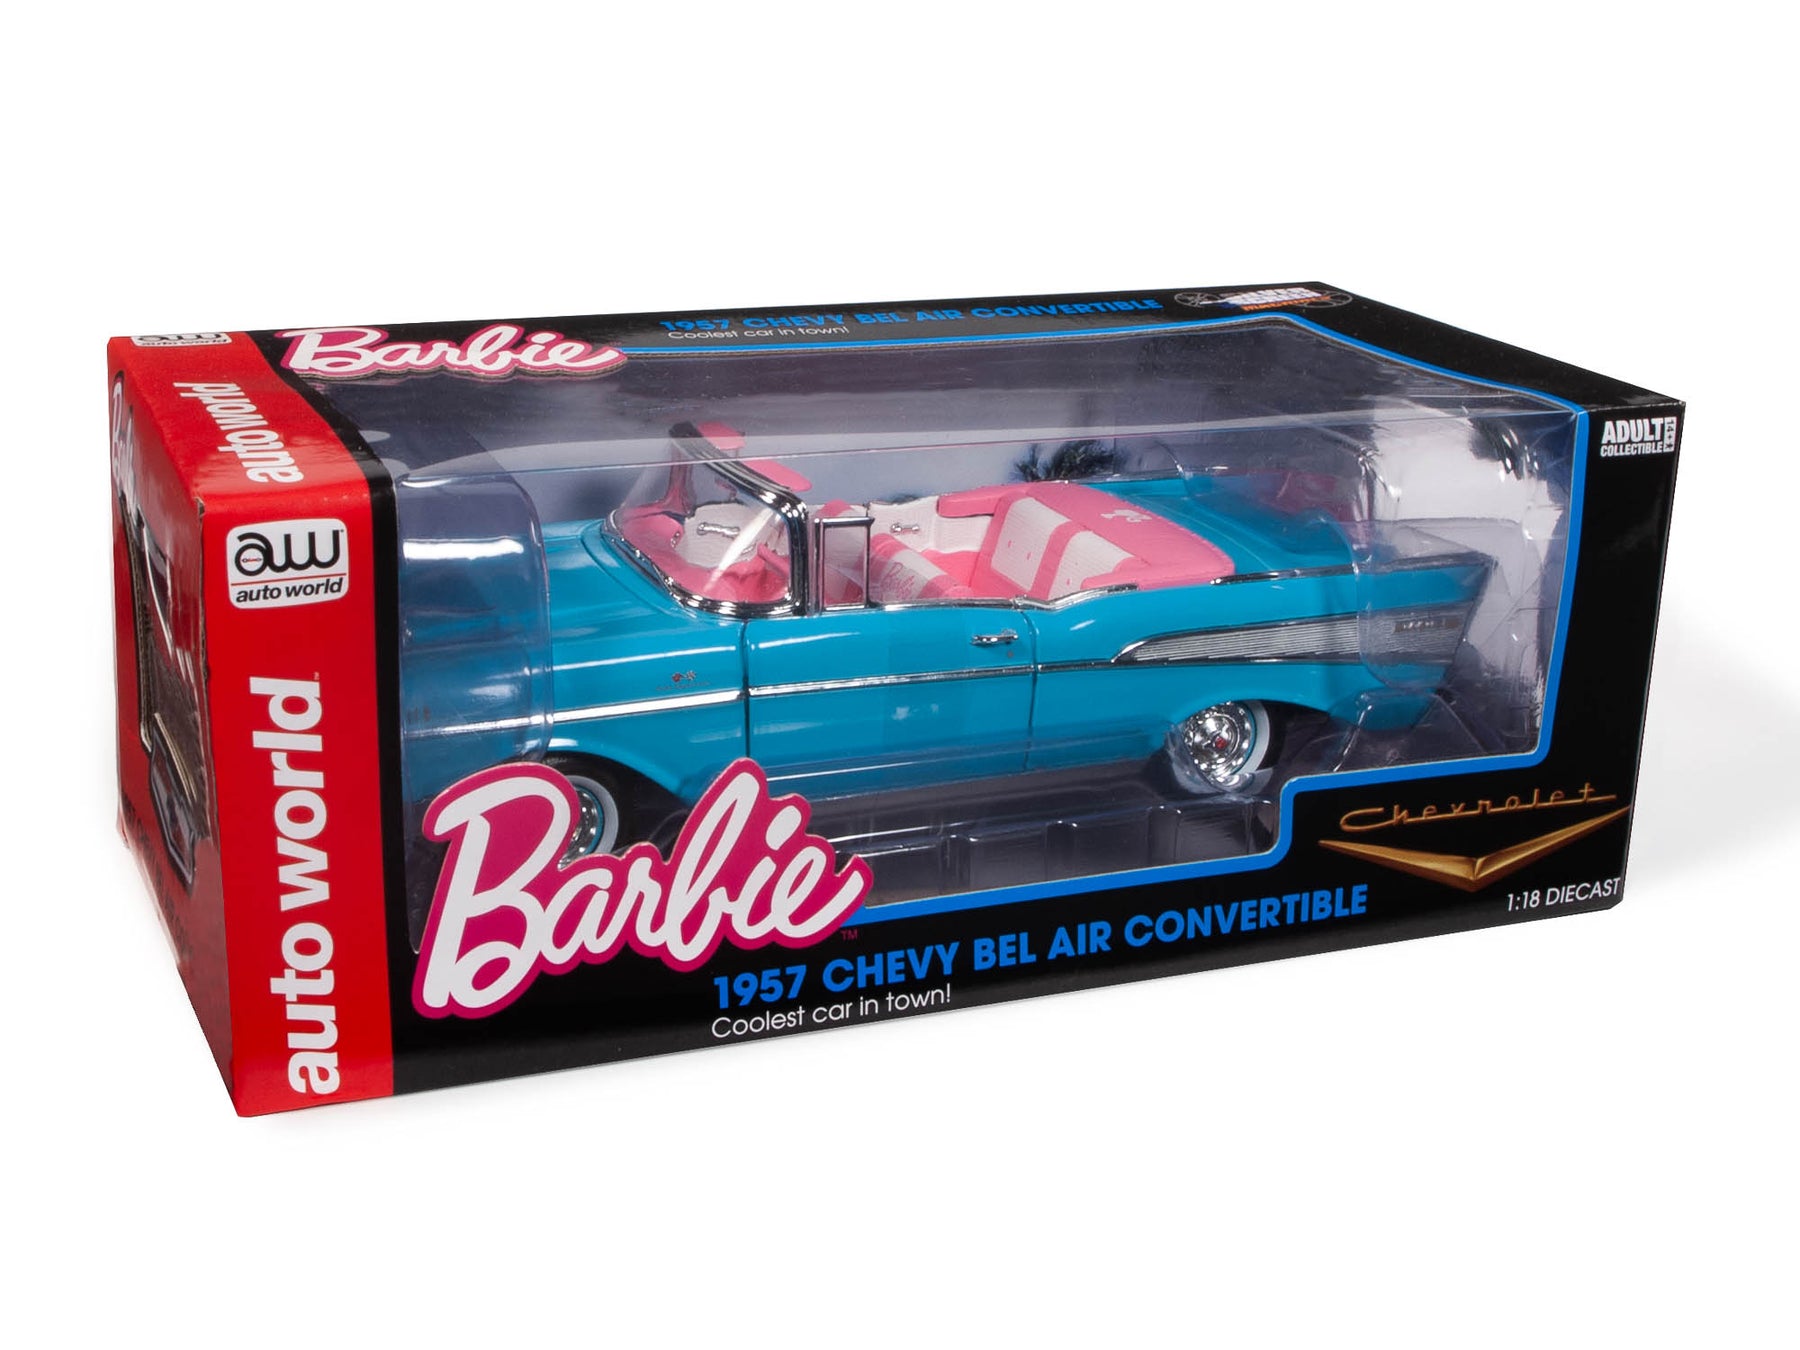 dief long Tegenhanger Auto World Barbie 1957 Chevy Bel Air Convertible (Aqua Blue) 1:18 Scal –  Auto World Store